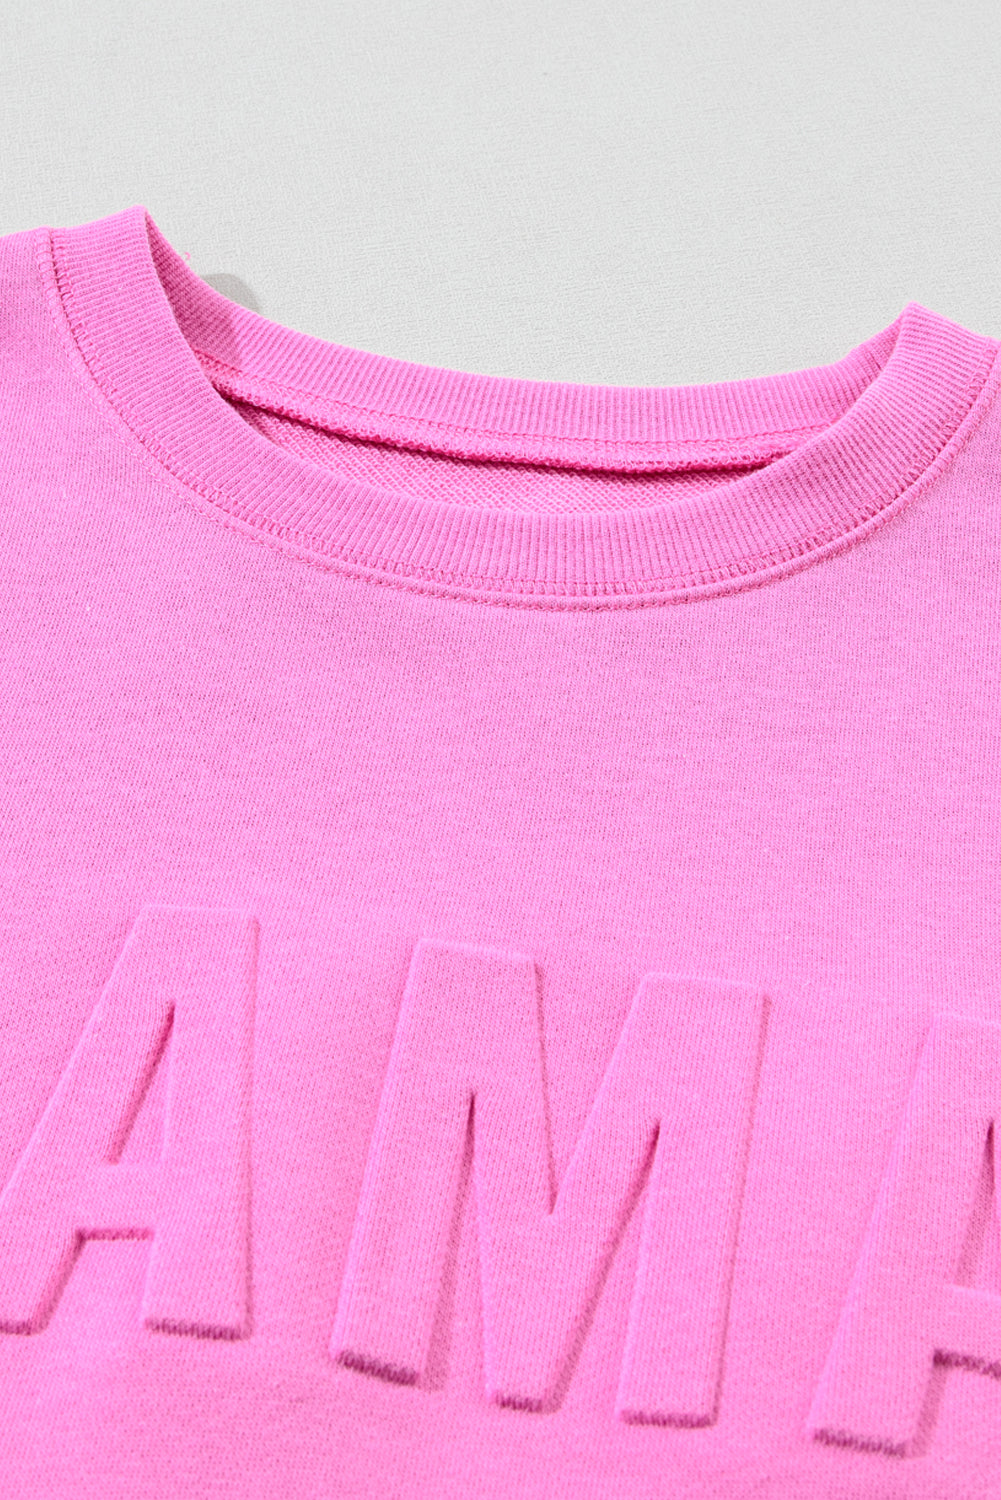 Bright Pink MAMA Letter Embossed Casual Sweatshirt - Nicole Lee Apparel